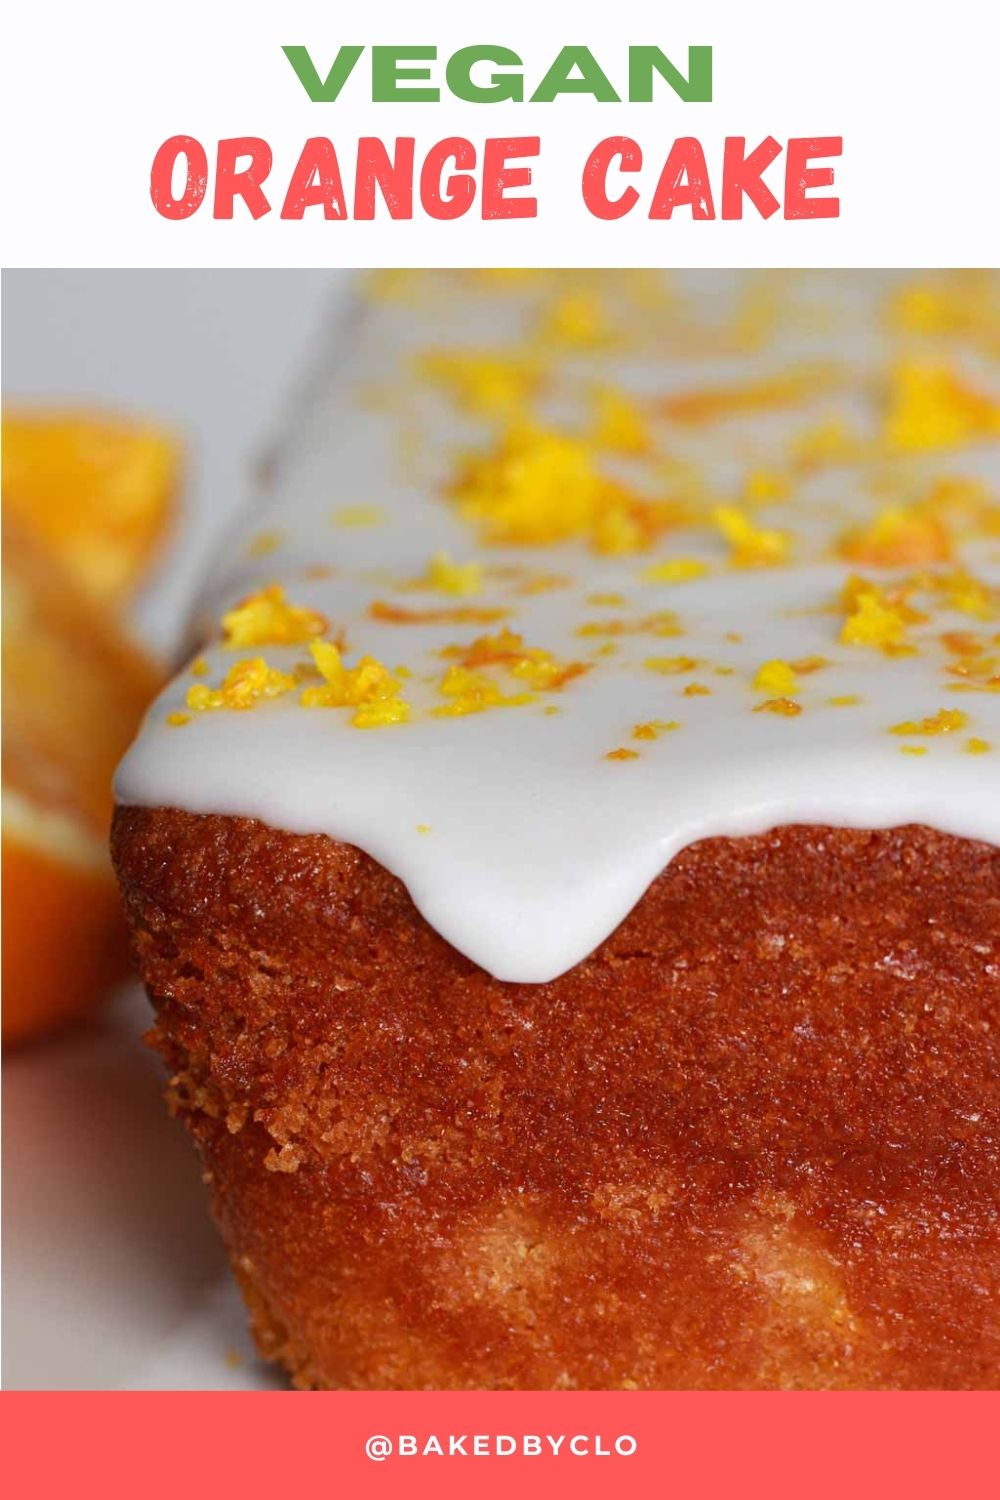 Pinterest image of cake alongside text that reads "vegan orange cake"